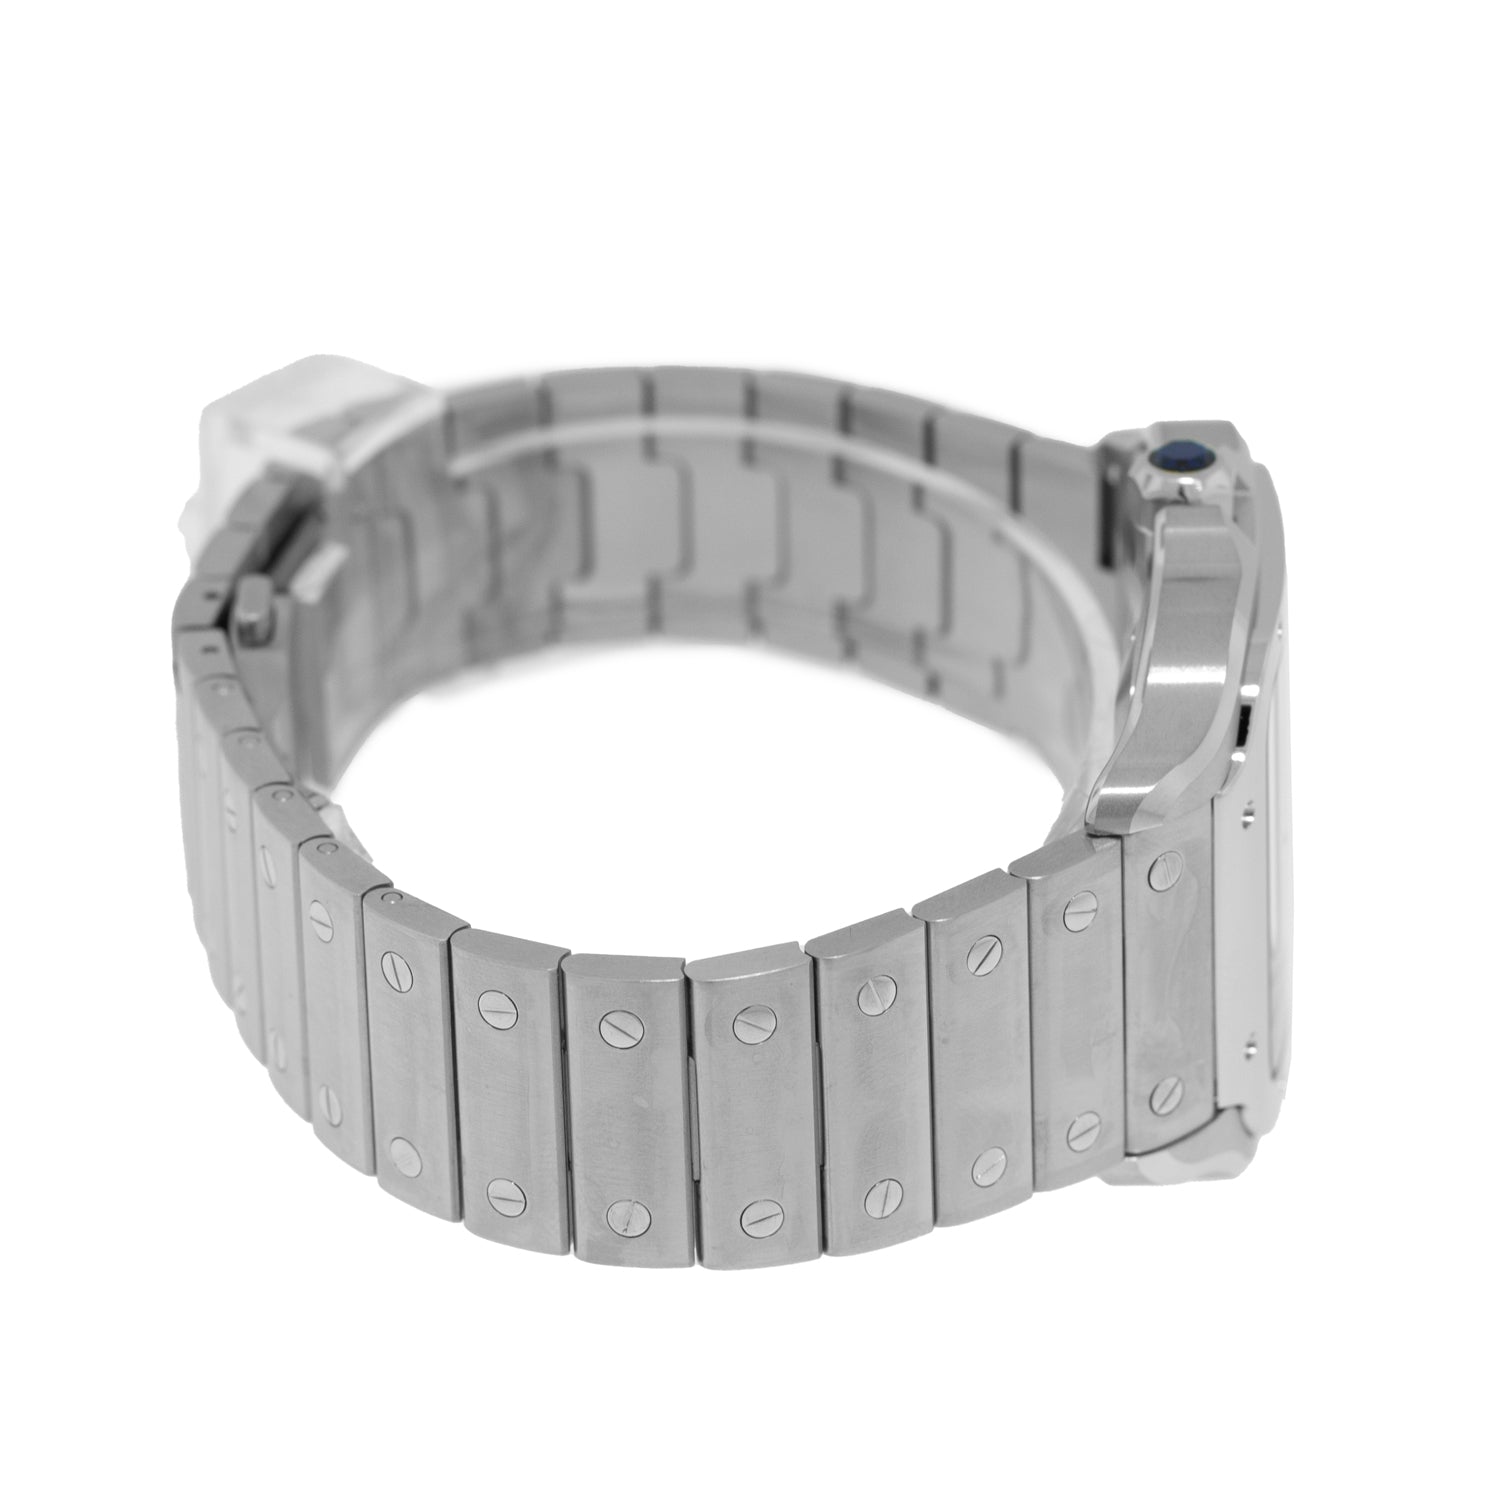 Stainless Steel Bracelet - Cartier Stainless Steel Strap